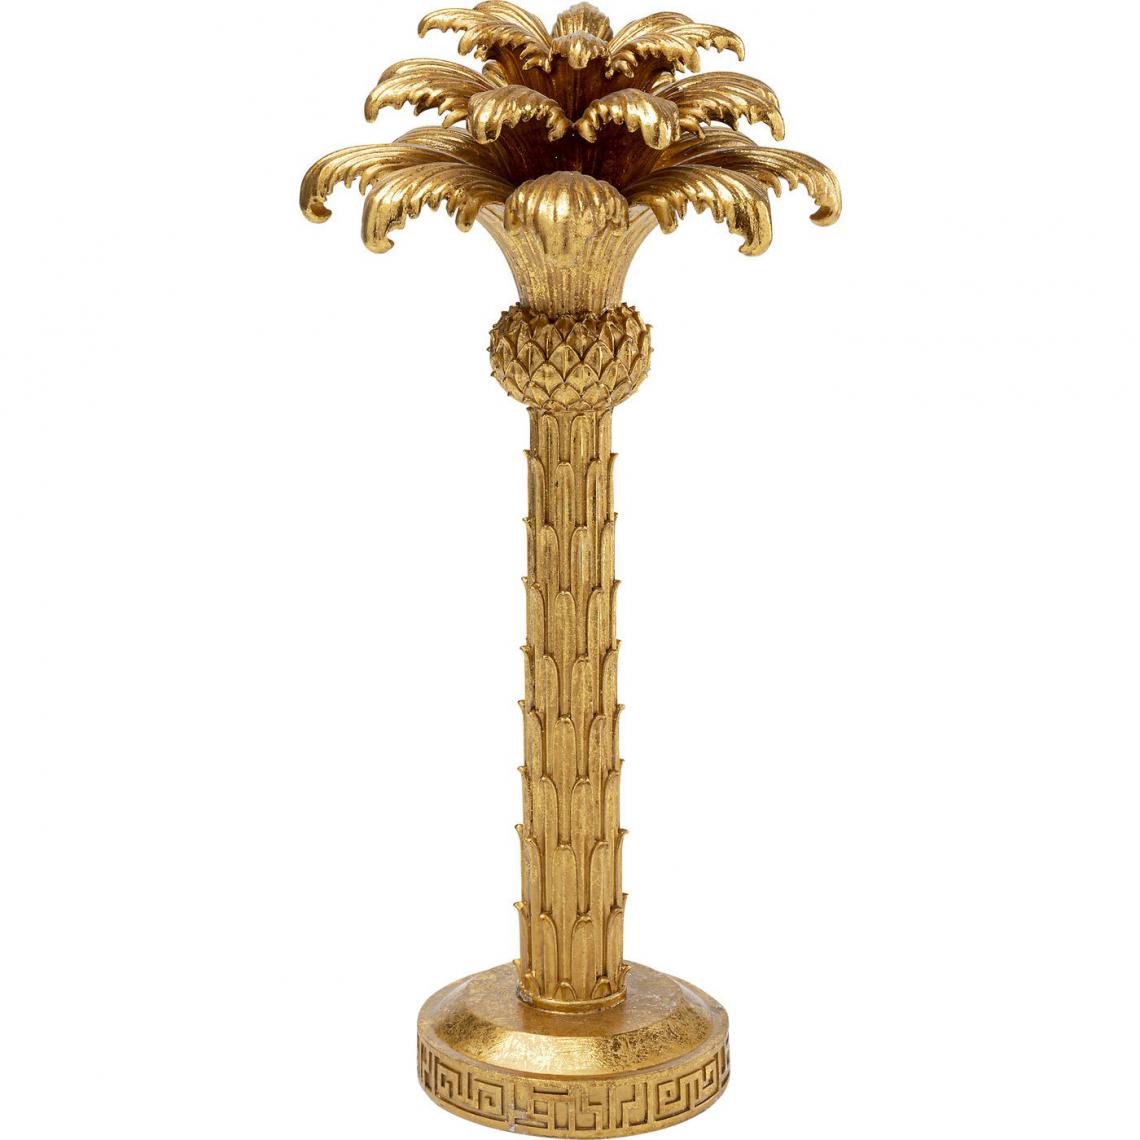 Karedesign - Bougeoir palmier doré 48cm Kare Design - Bougeoirs, chandeliers